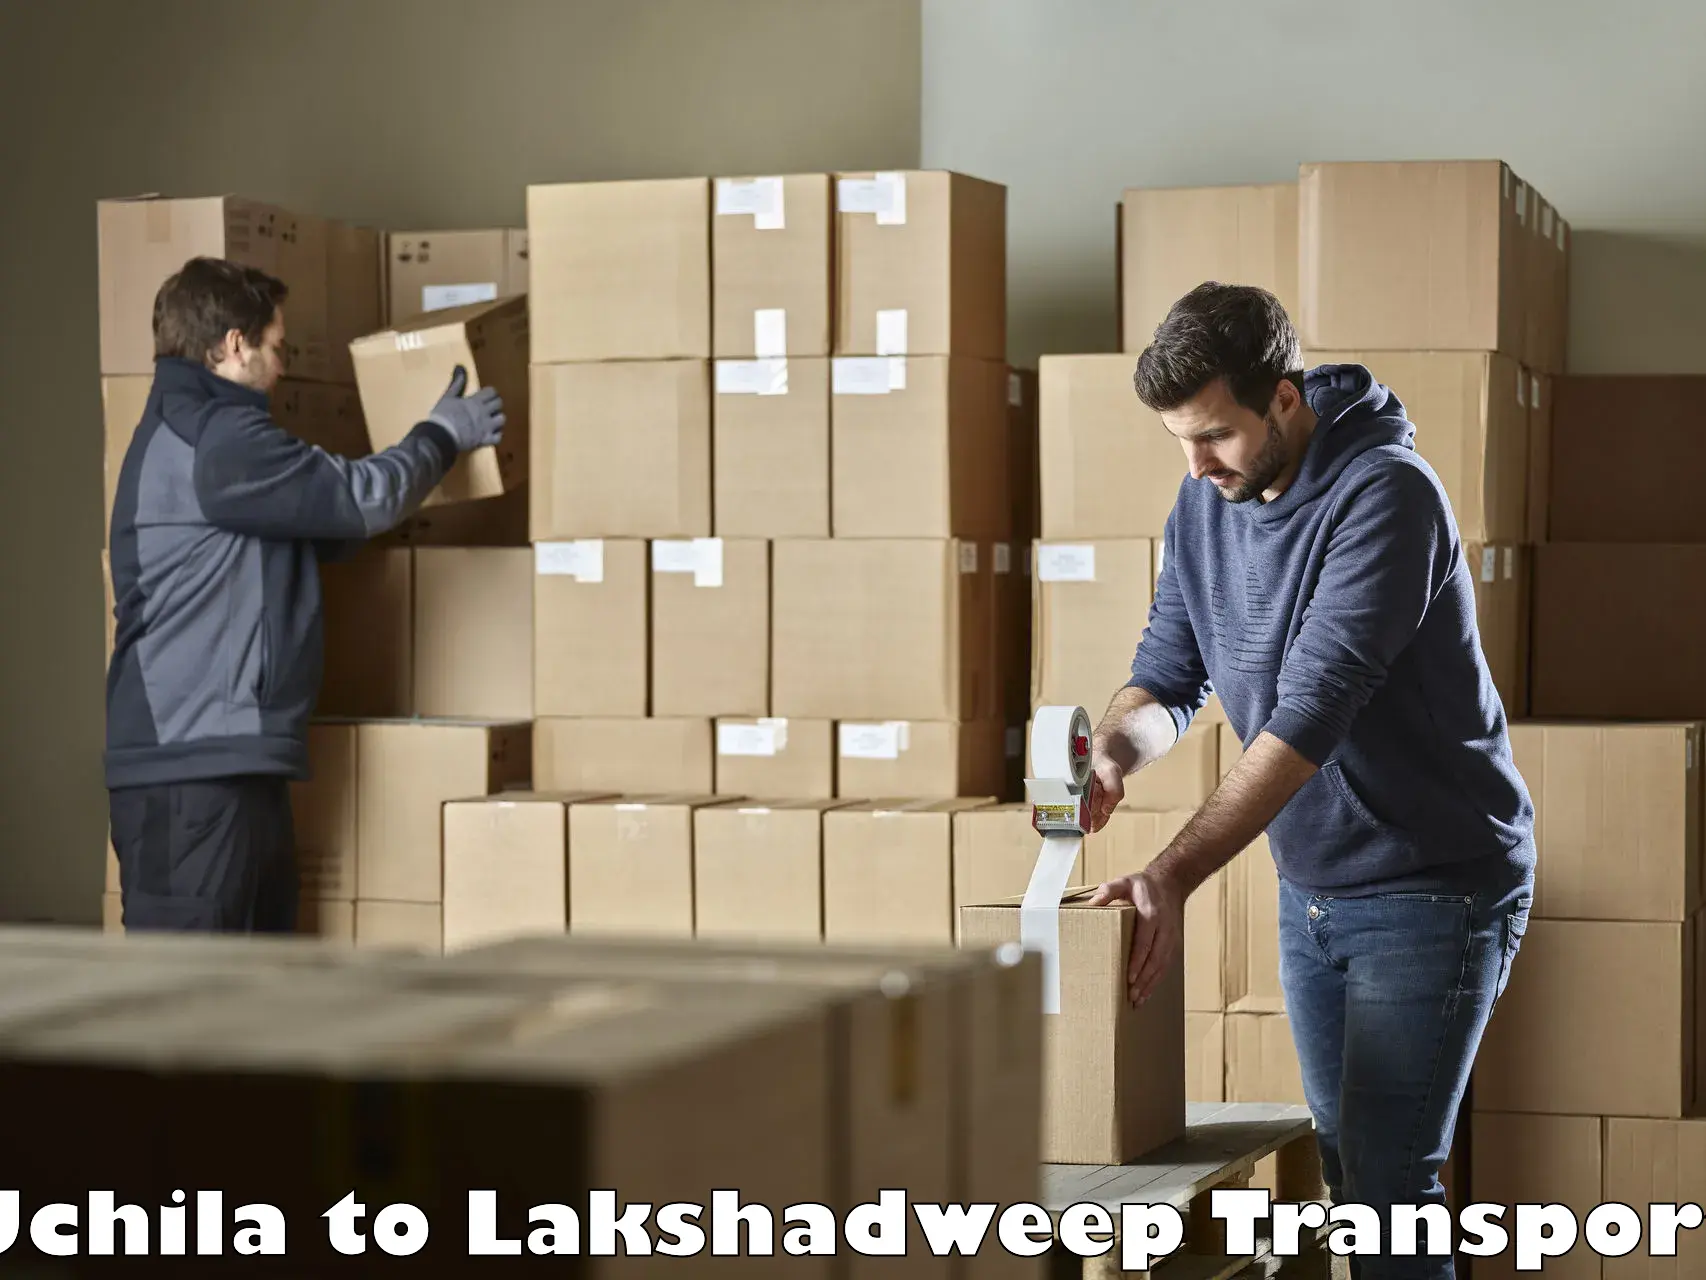 Commercial transport service Uchila to Lakshadweep